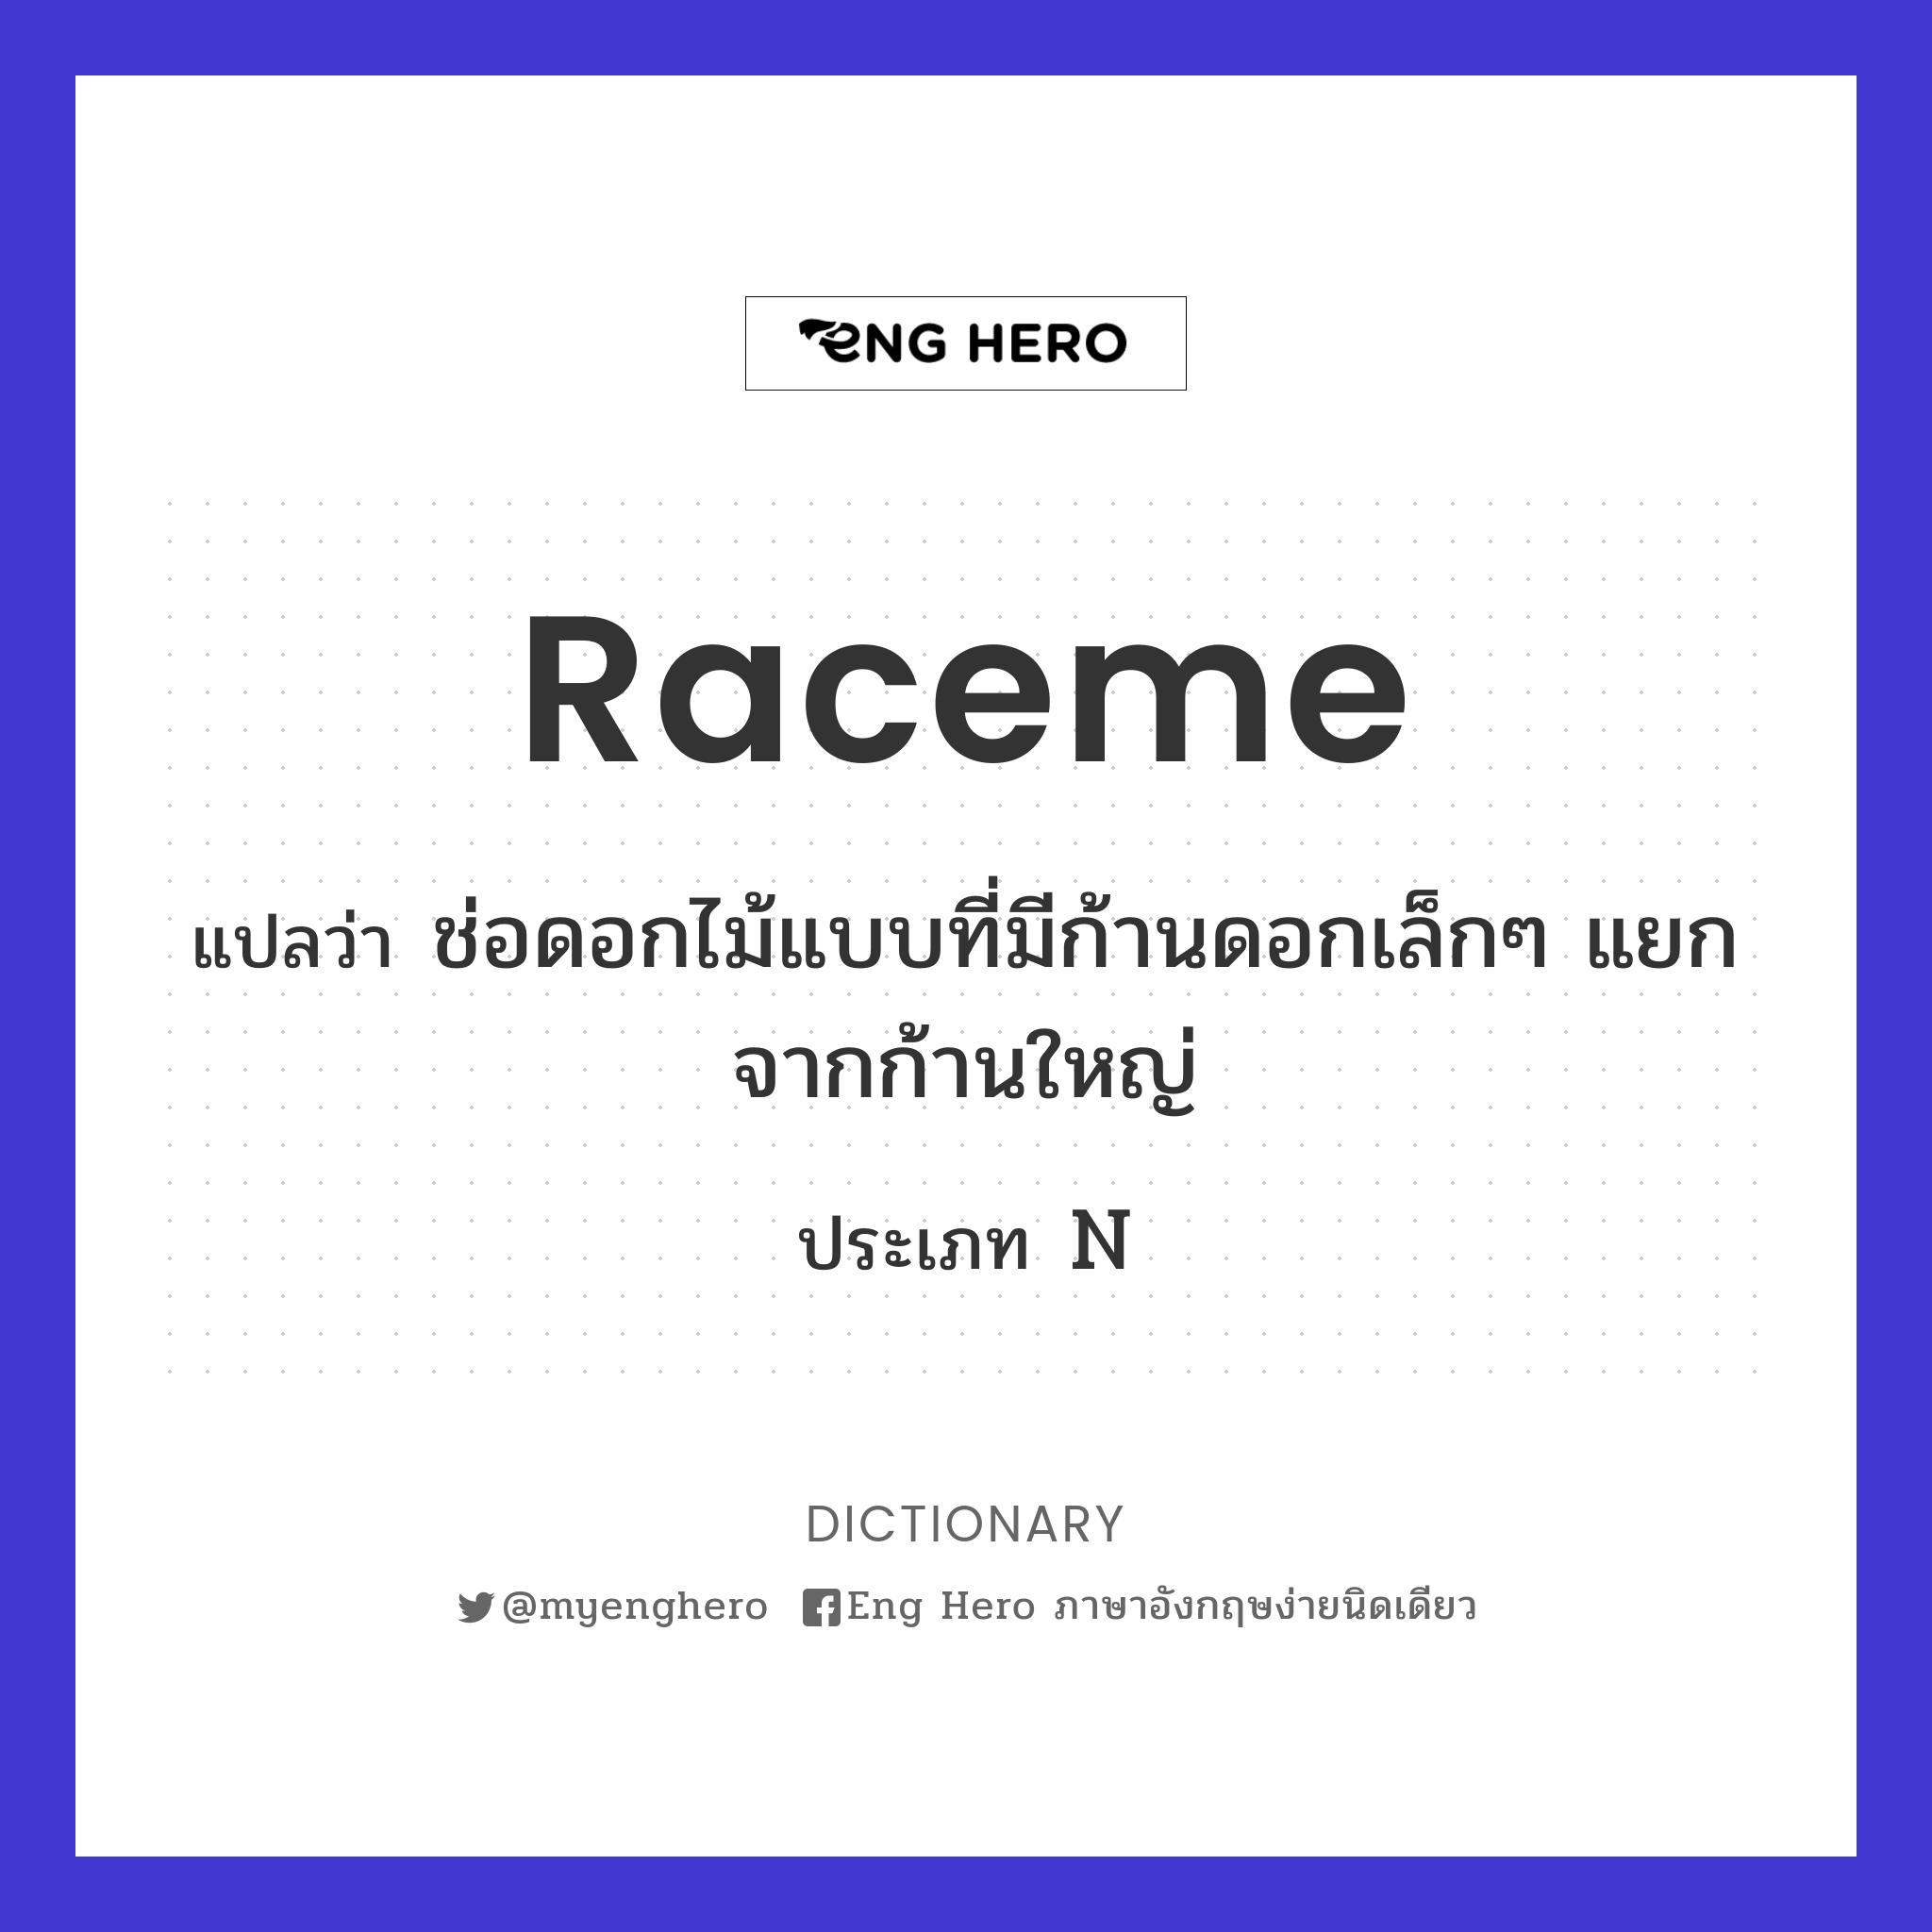 raceme